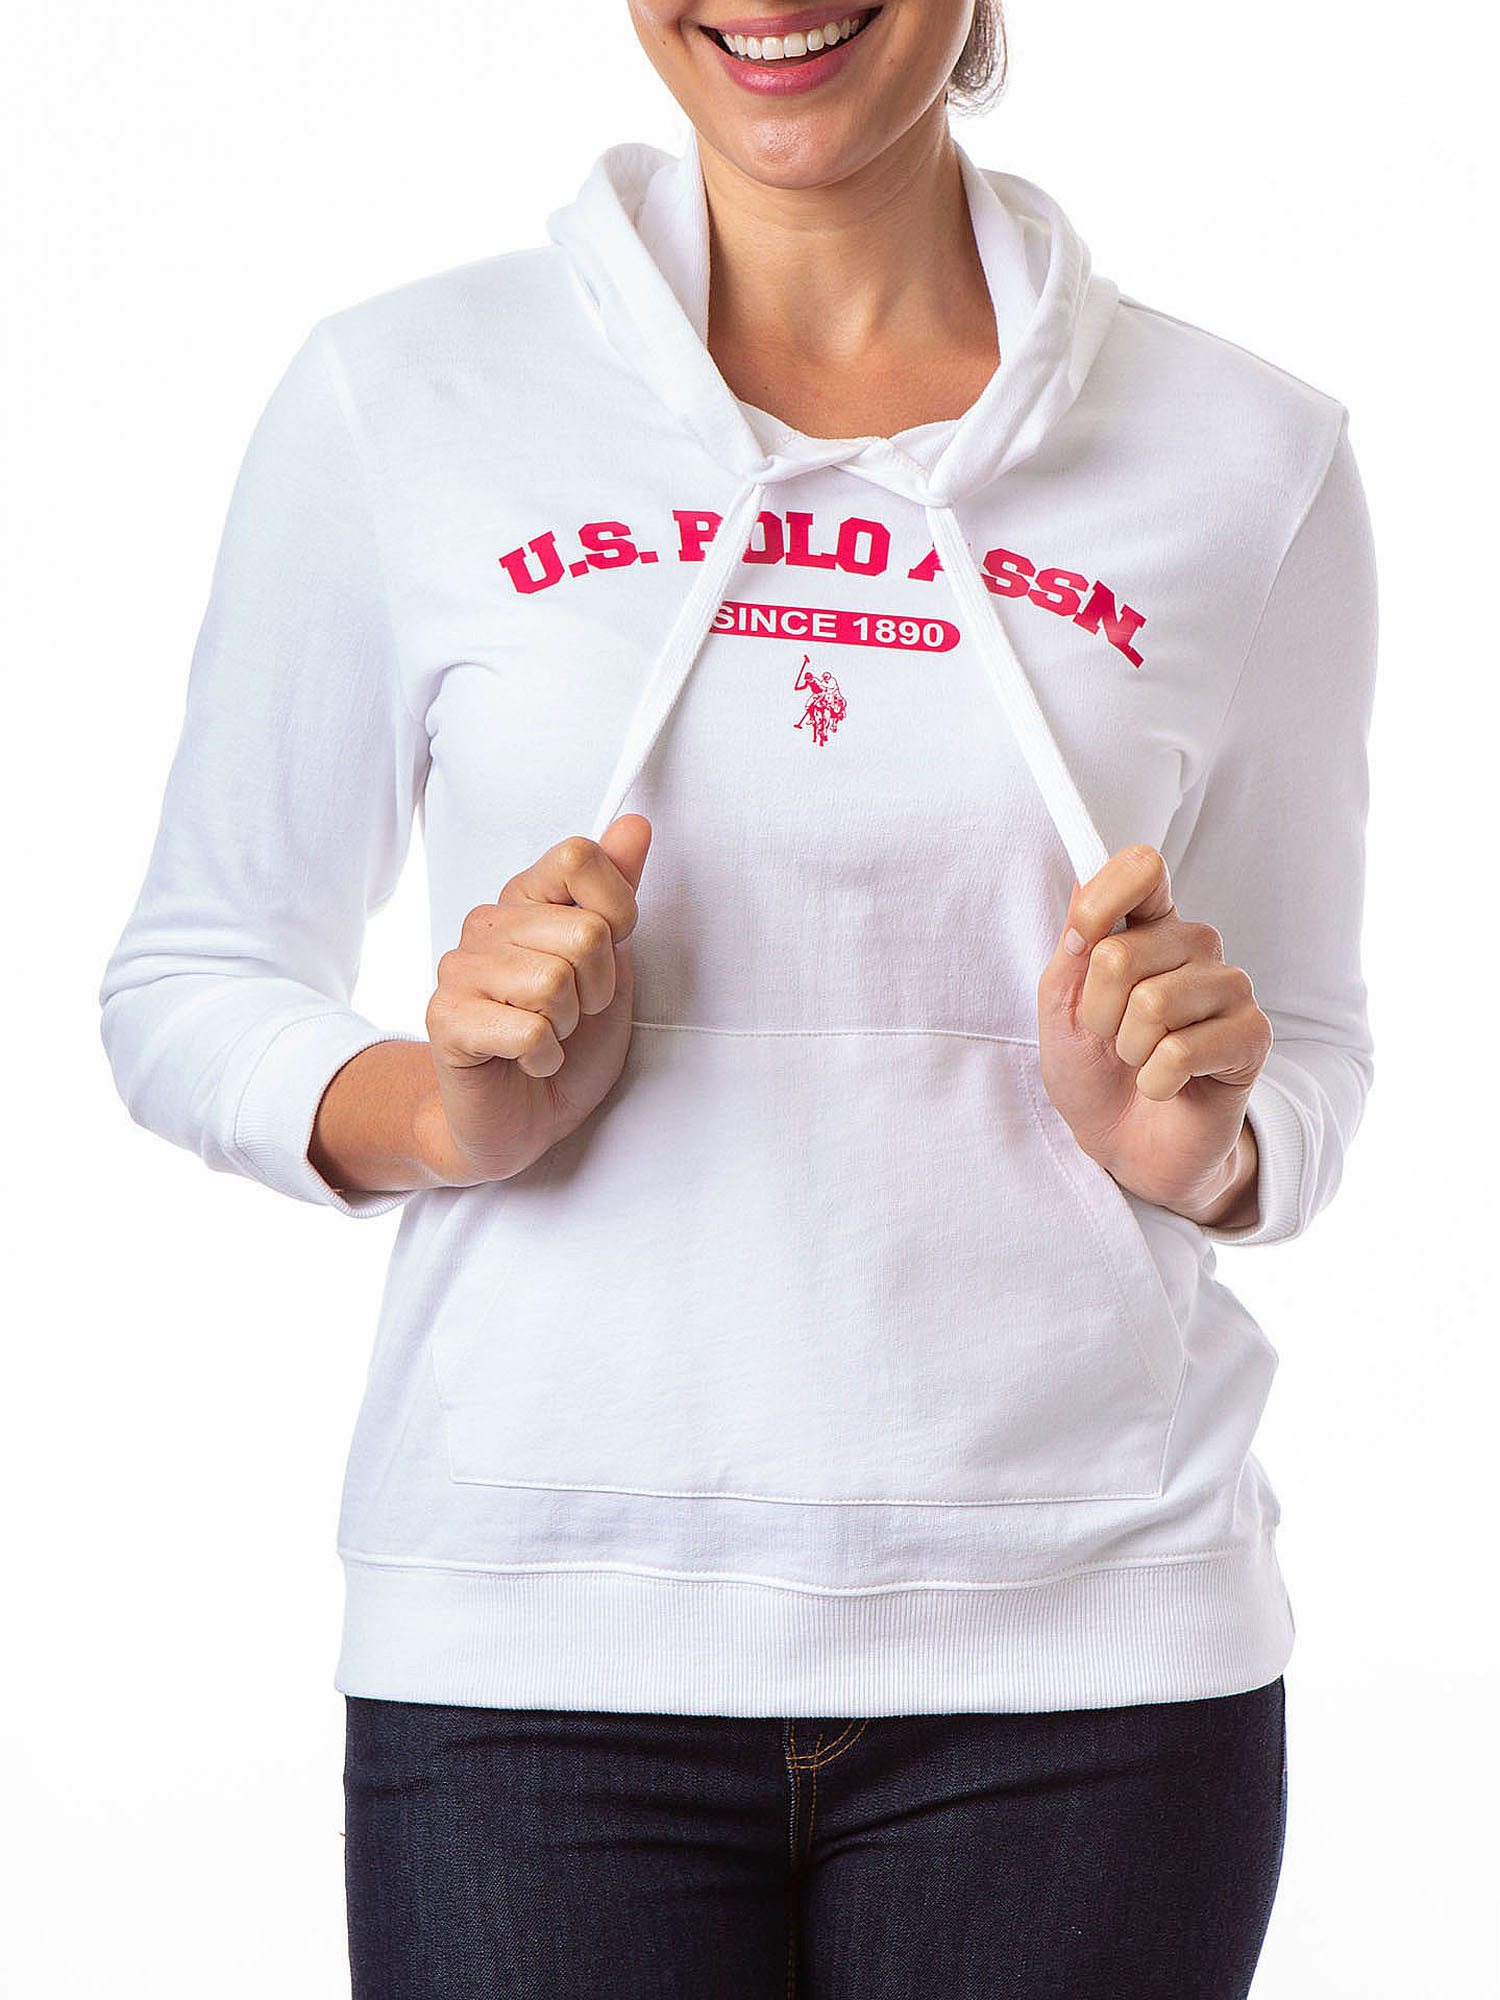 US Polo Assn. Women's Logo Sweatshirt Hoodie - image 1 of 3